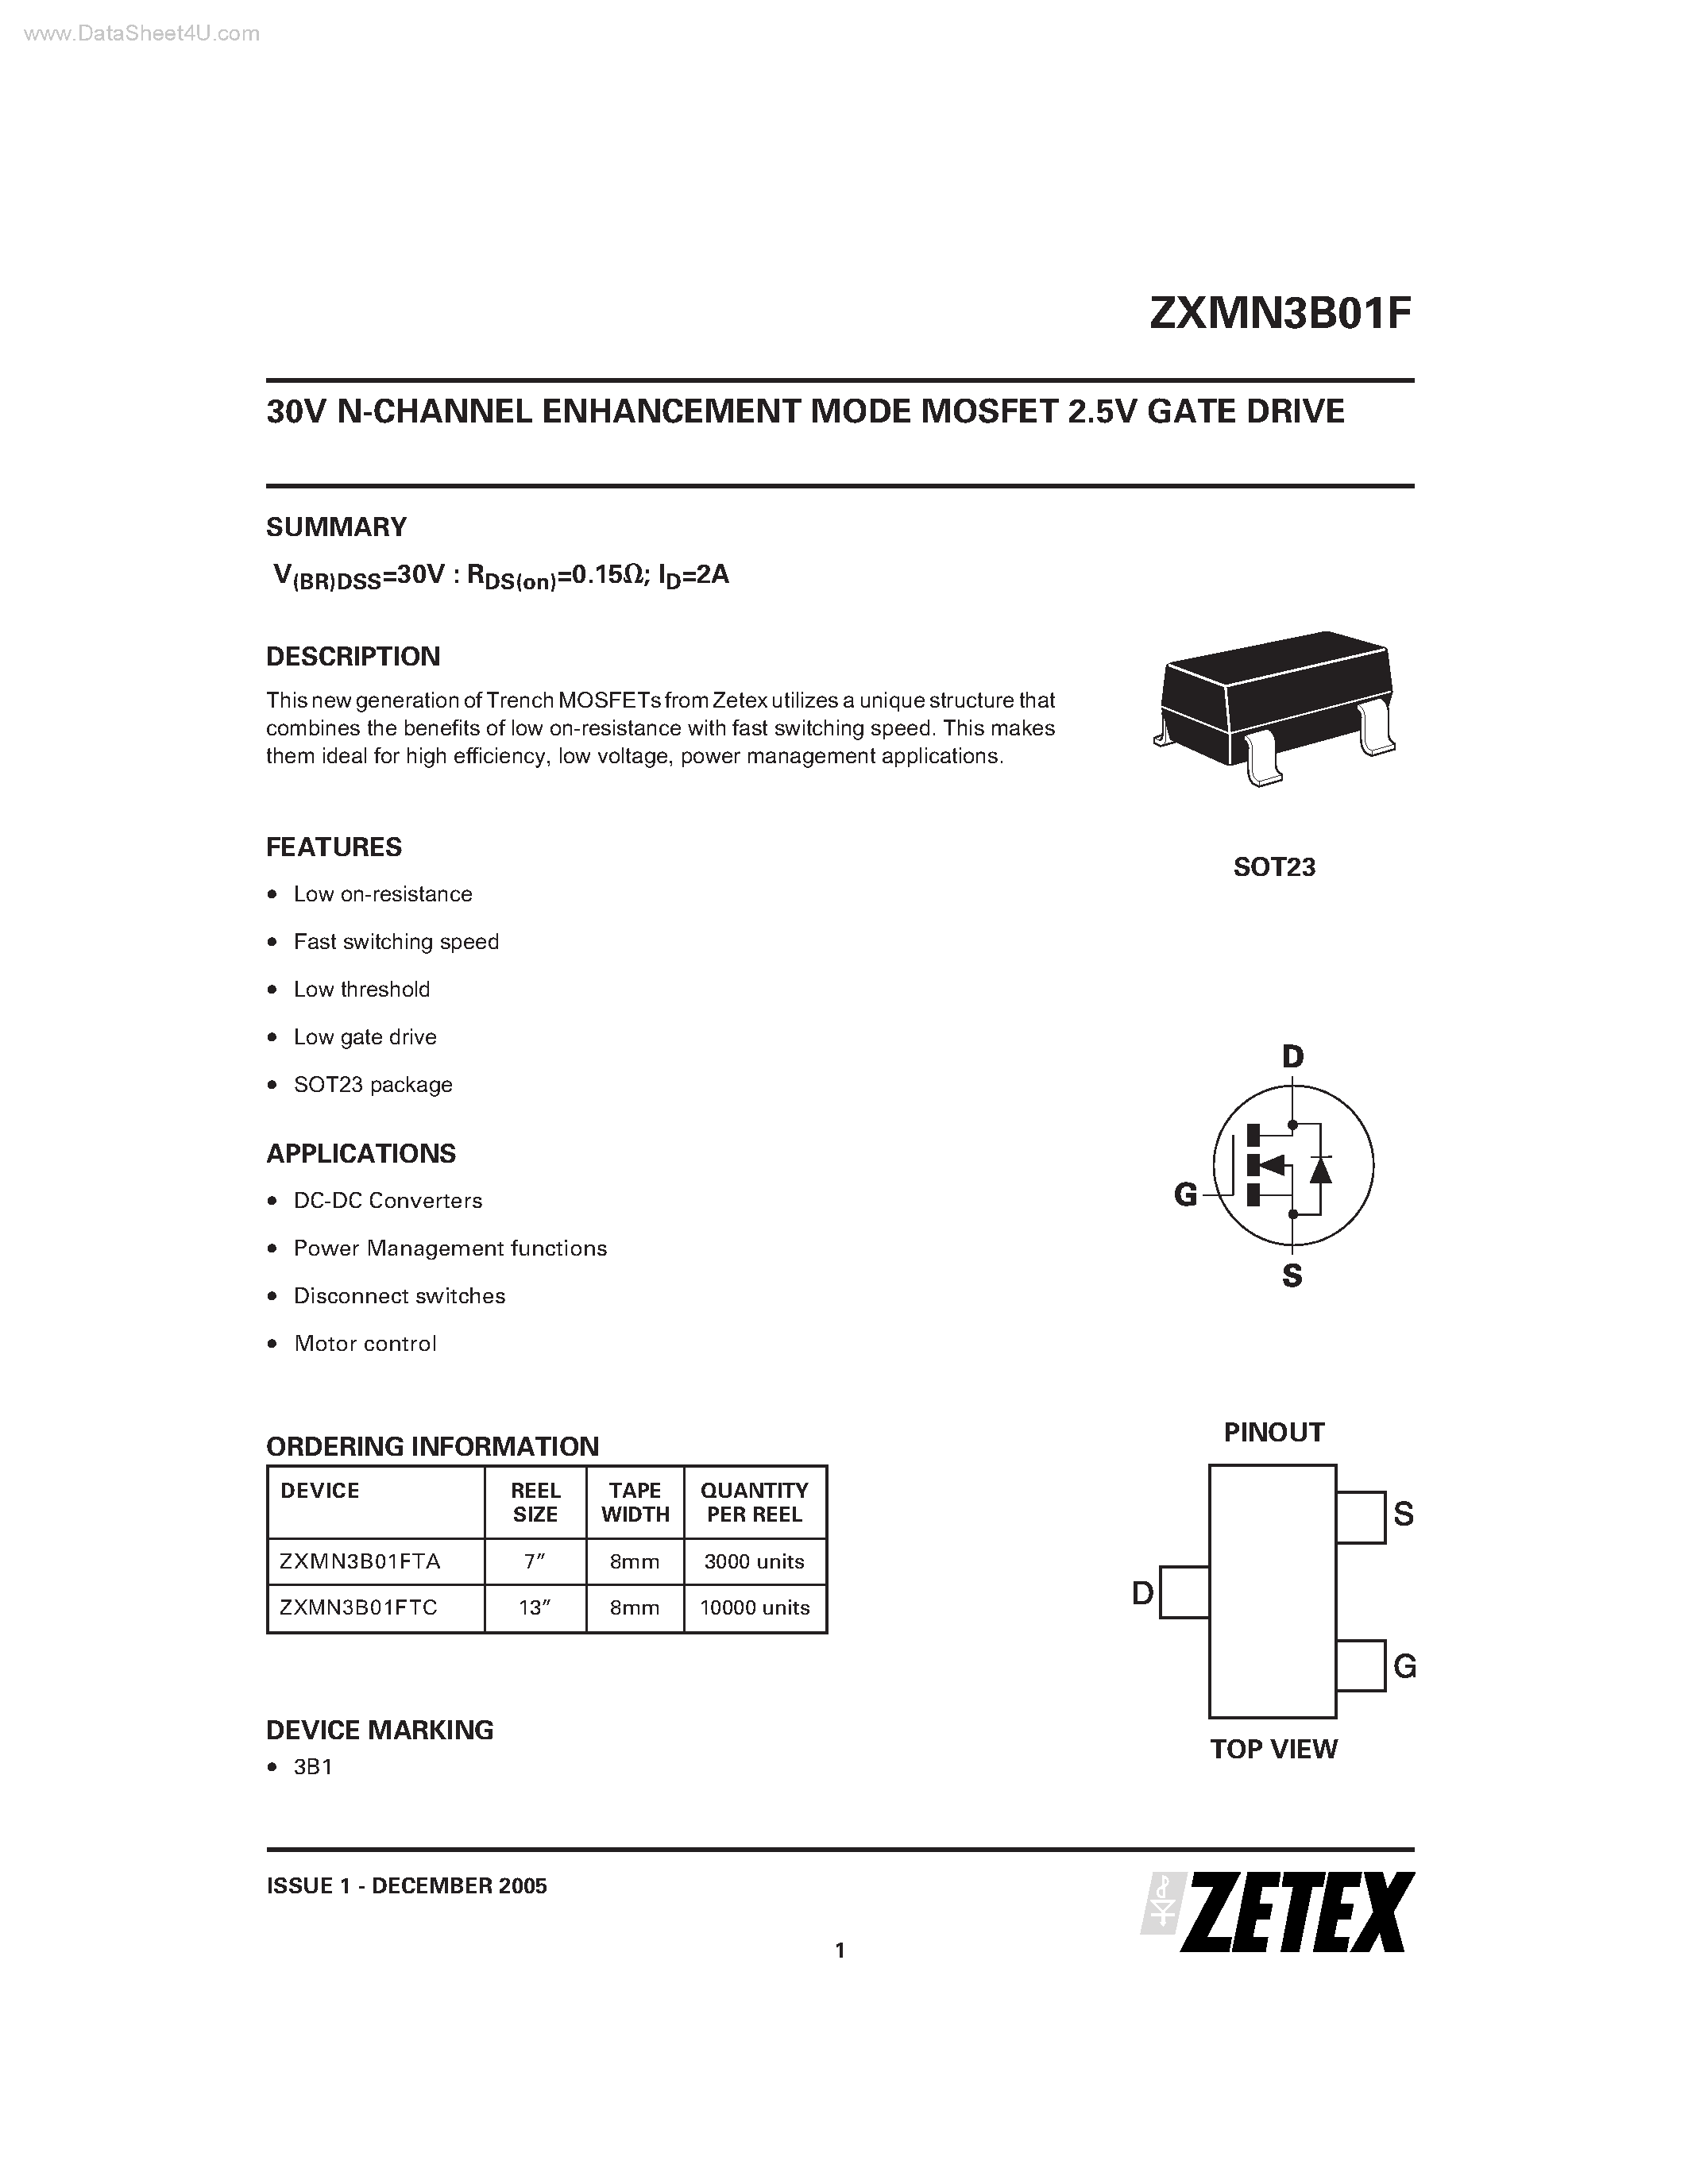 Даташит ZXMN3B01F - N-CHANNEL ENHANCEMENT MODE MOSFET 2.5V GATE DRIVE страница 1